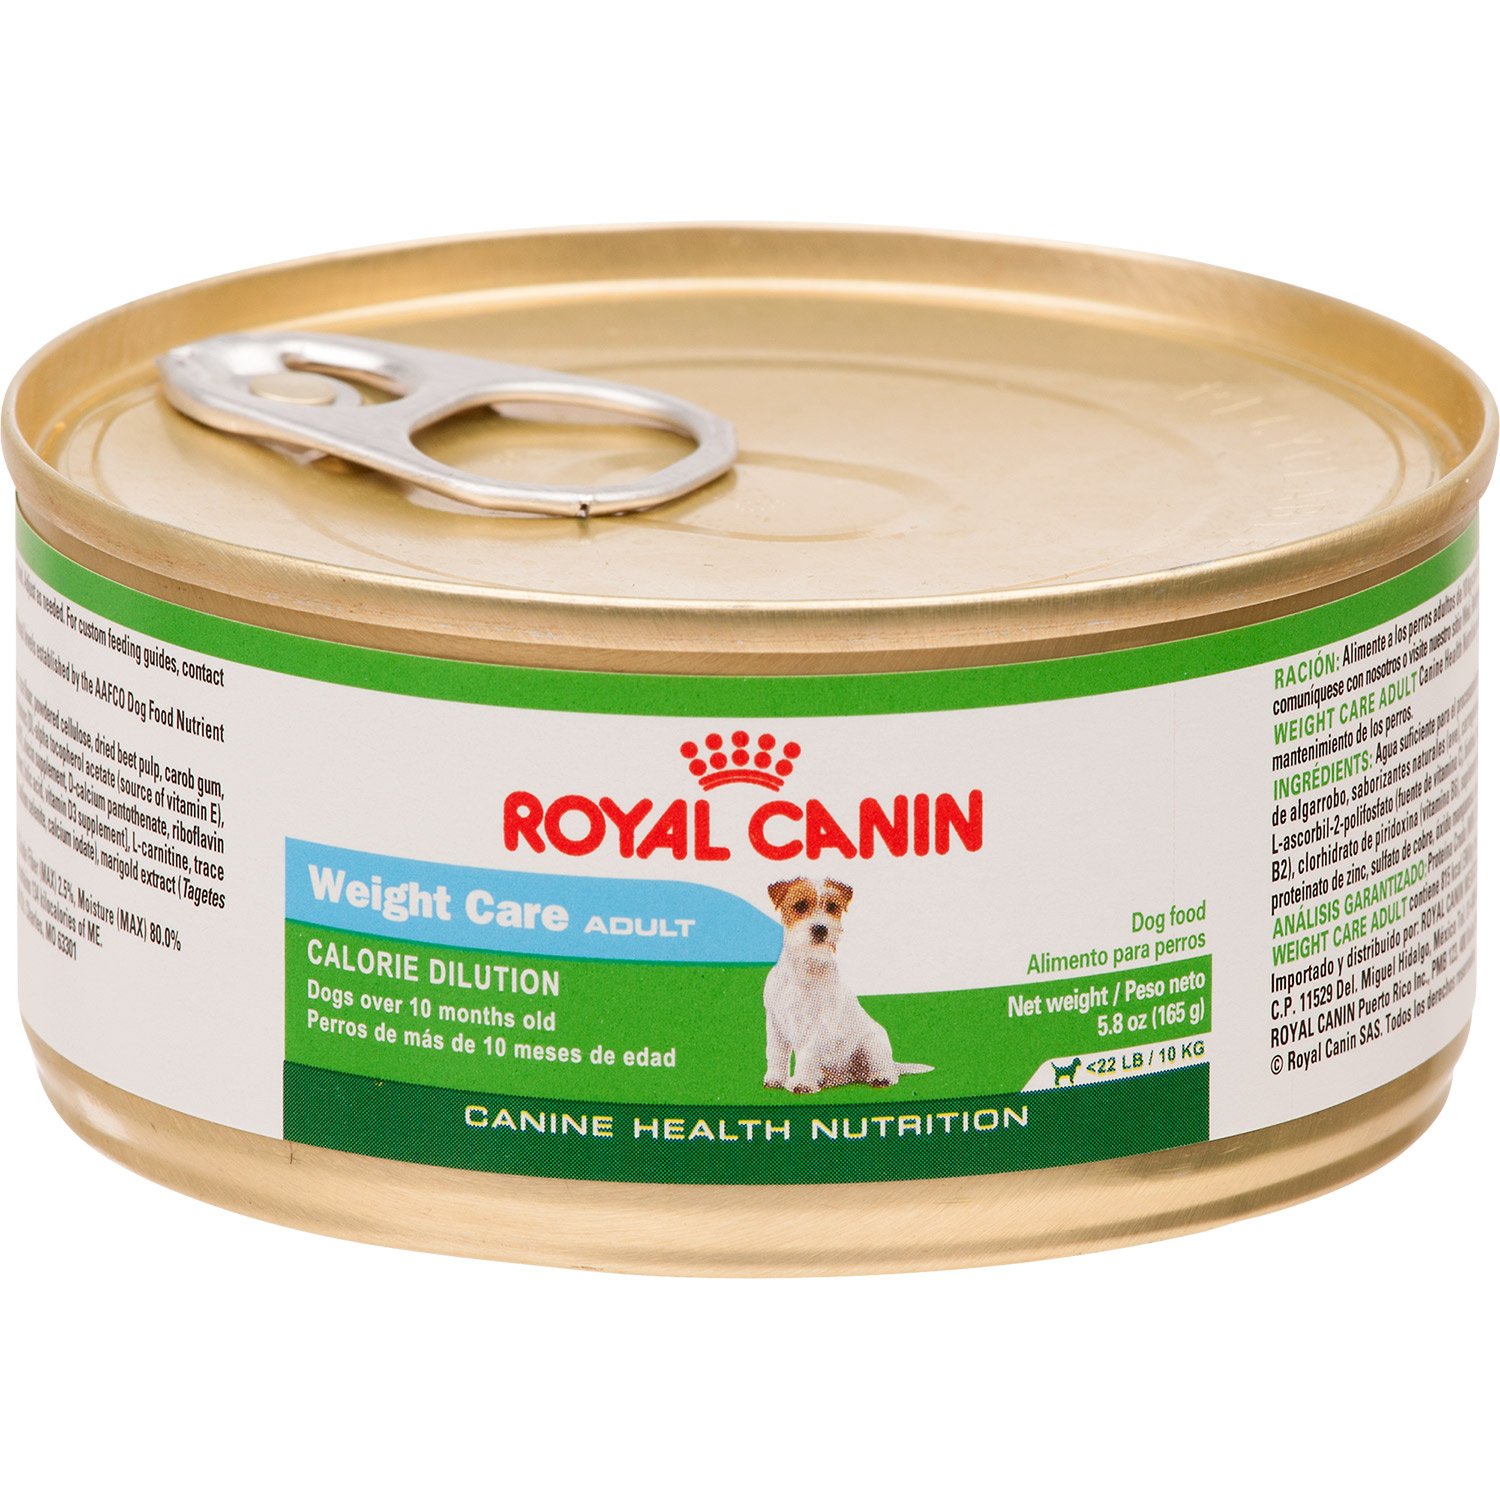 Royal Canin Canned UPC & Barcode | upcitemdb.com